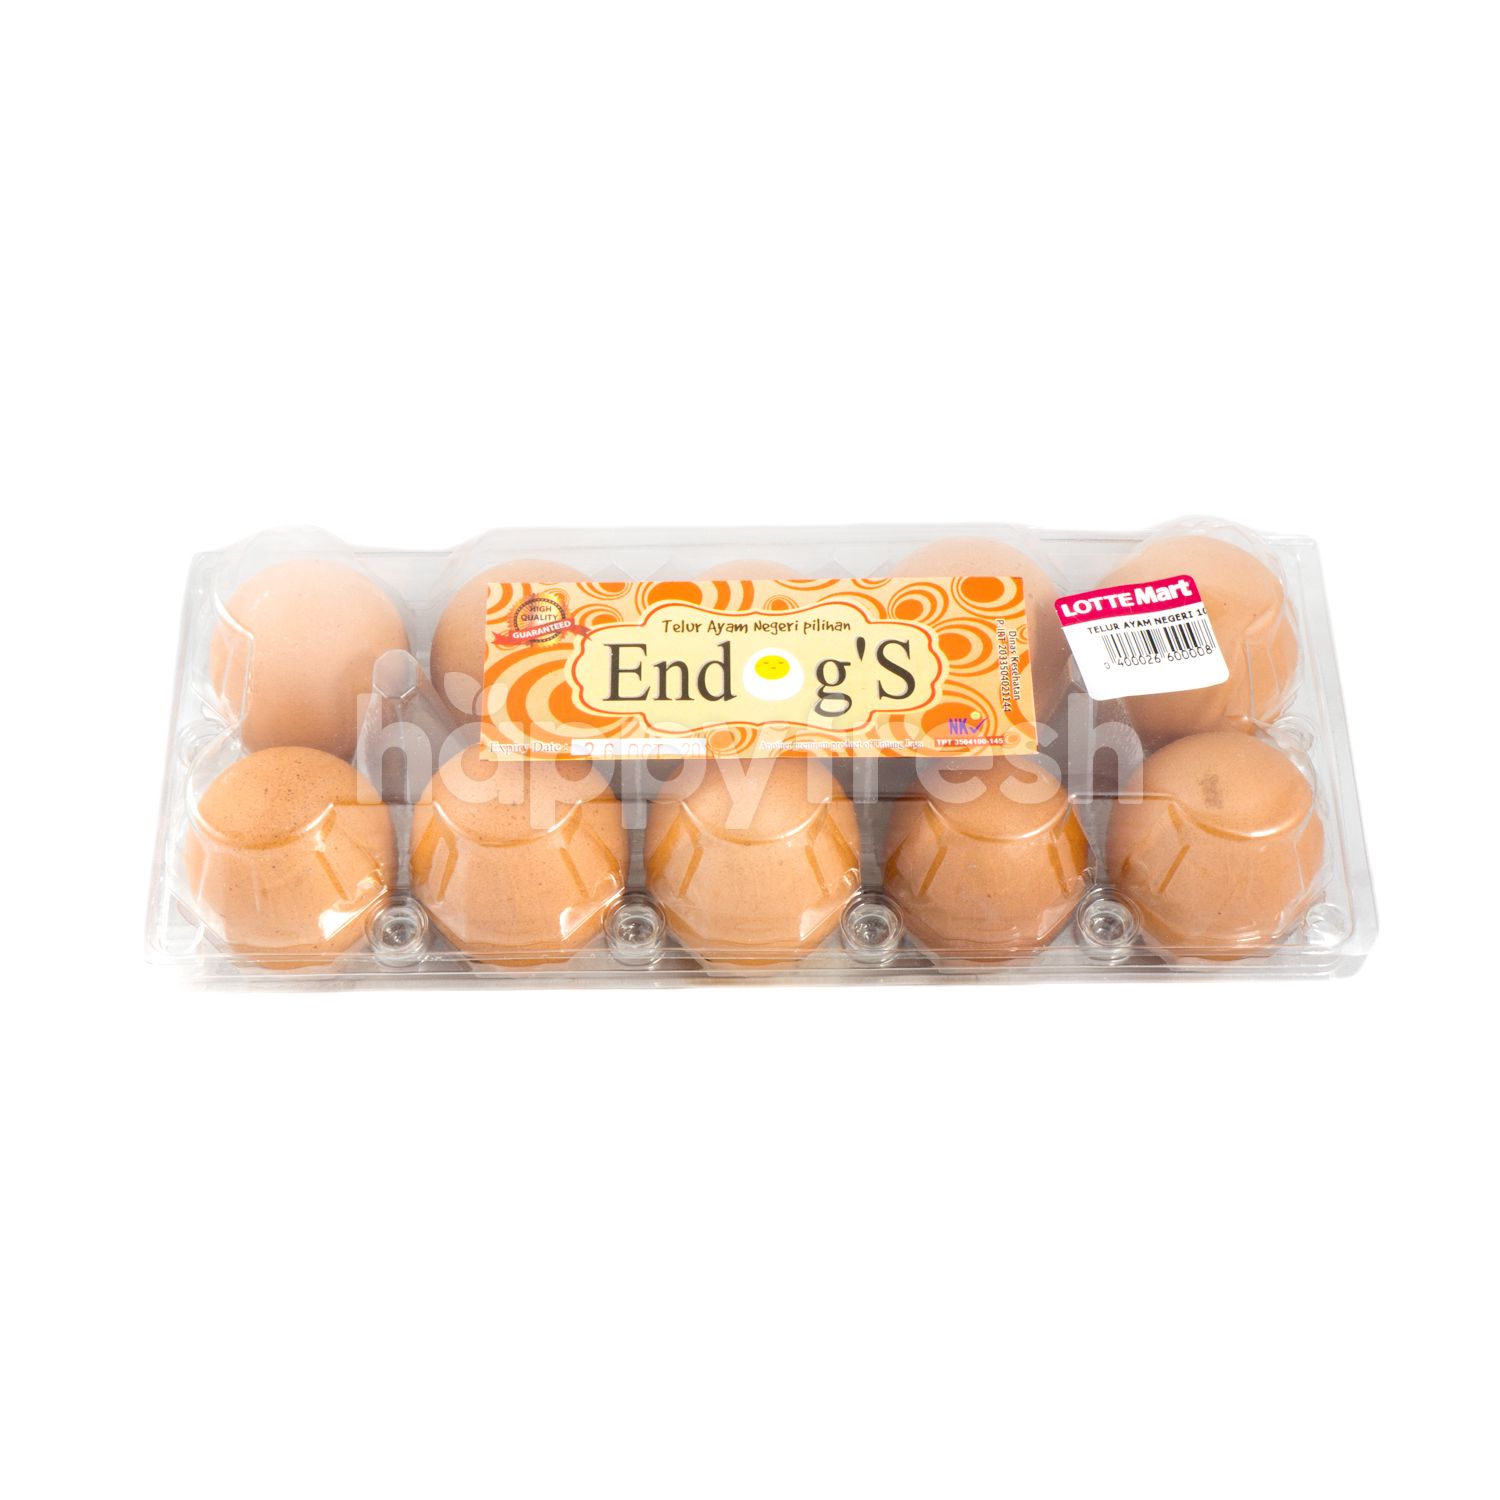 Jual Endog's Chicken Egg di Lotte Mart - HappyFresh